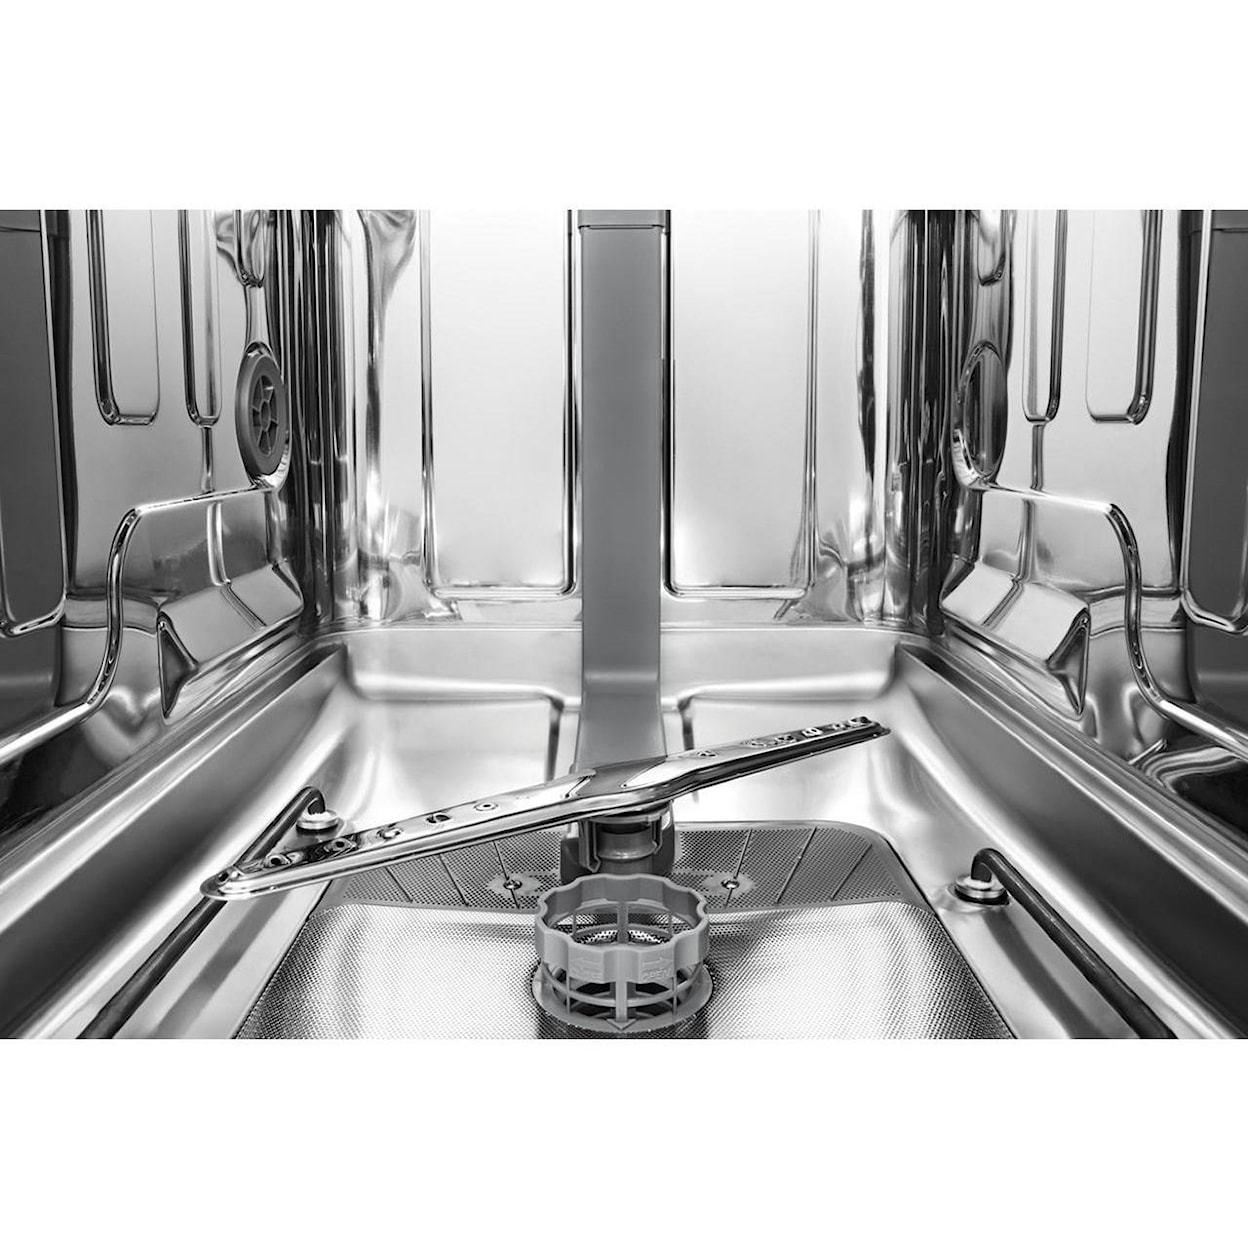 Whirlpool Dishwashers - Whirlpool Small-Space Compact Dishwasher